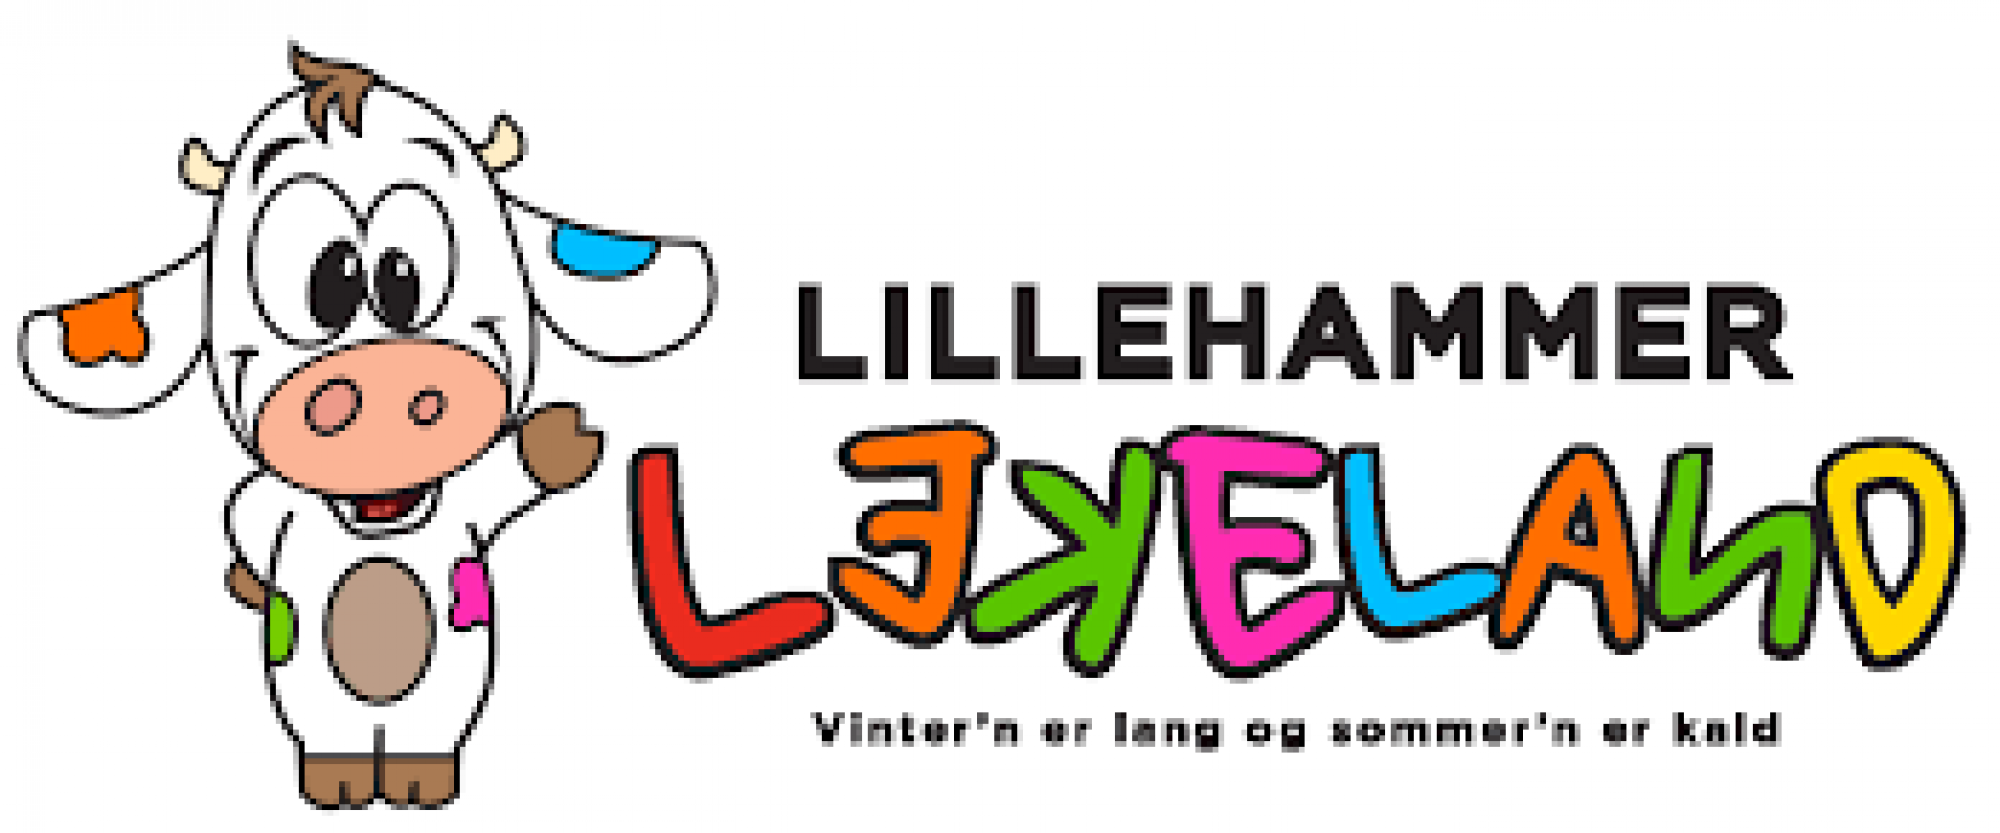 Lillehammer Lekeland